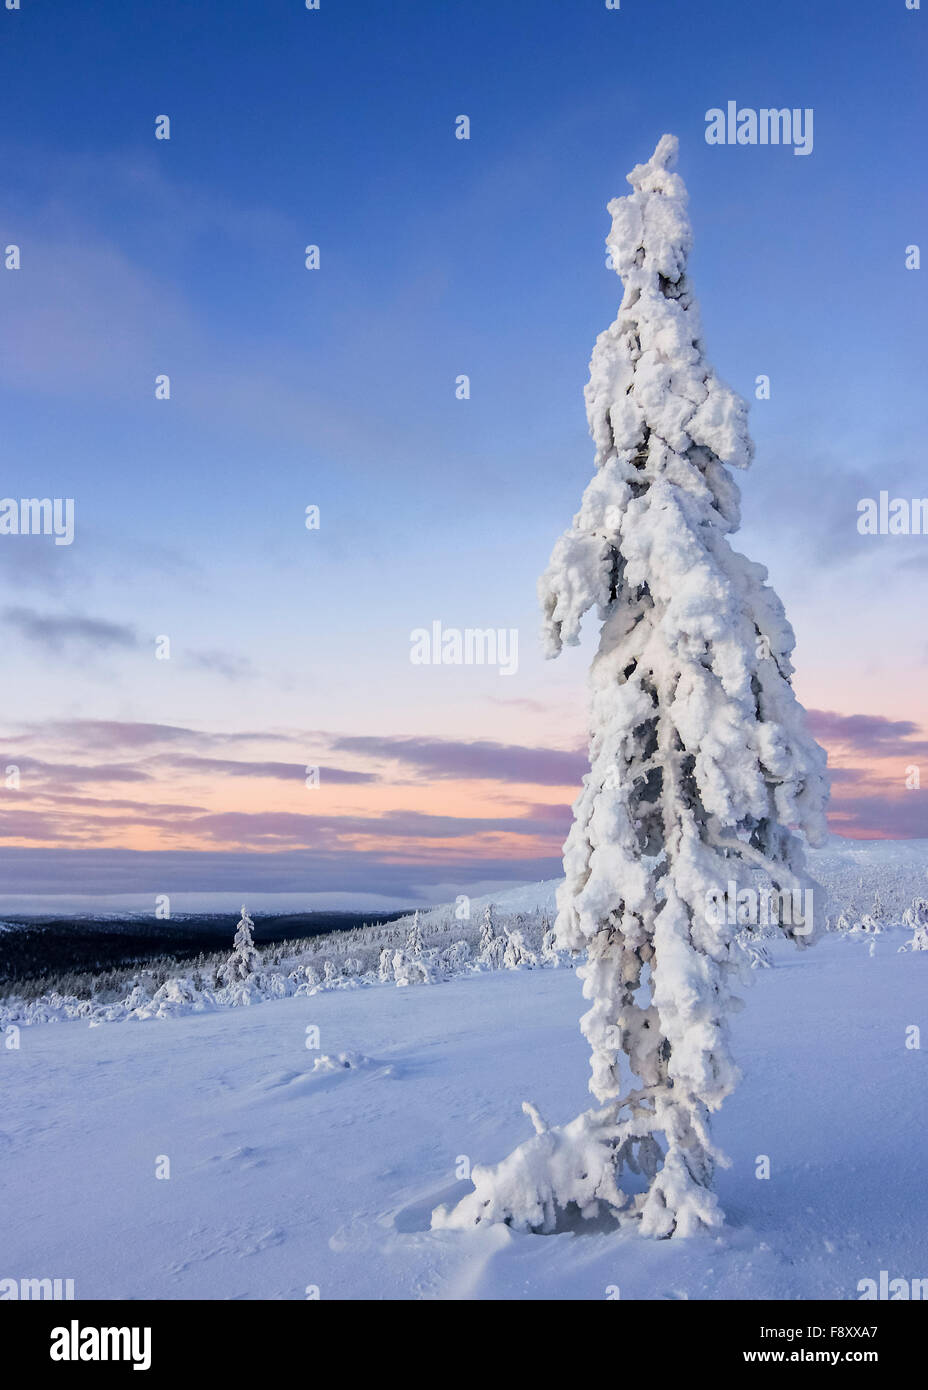 Snow-covered scots pine in Saariselkä, Finland Stock Photo